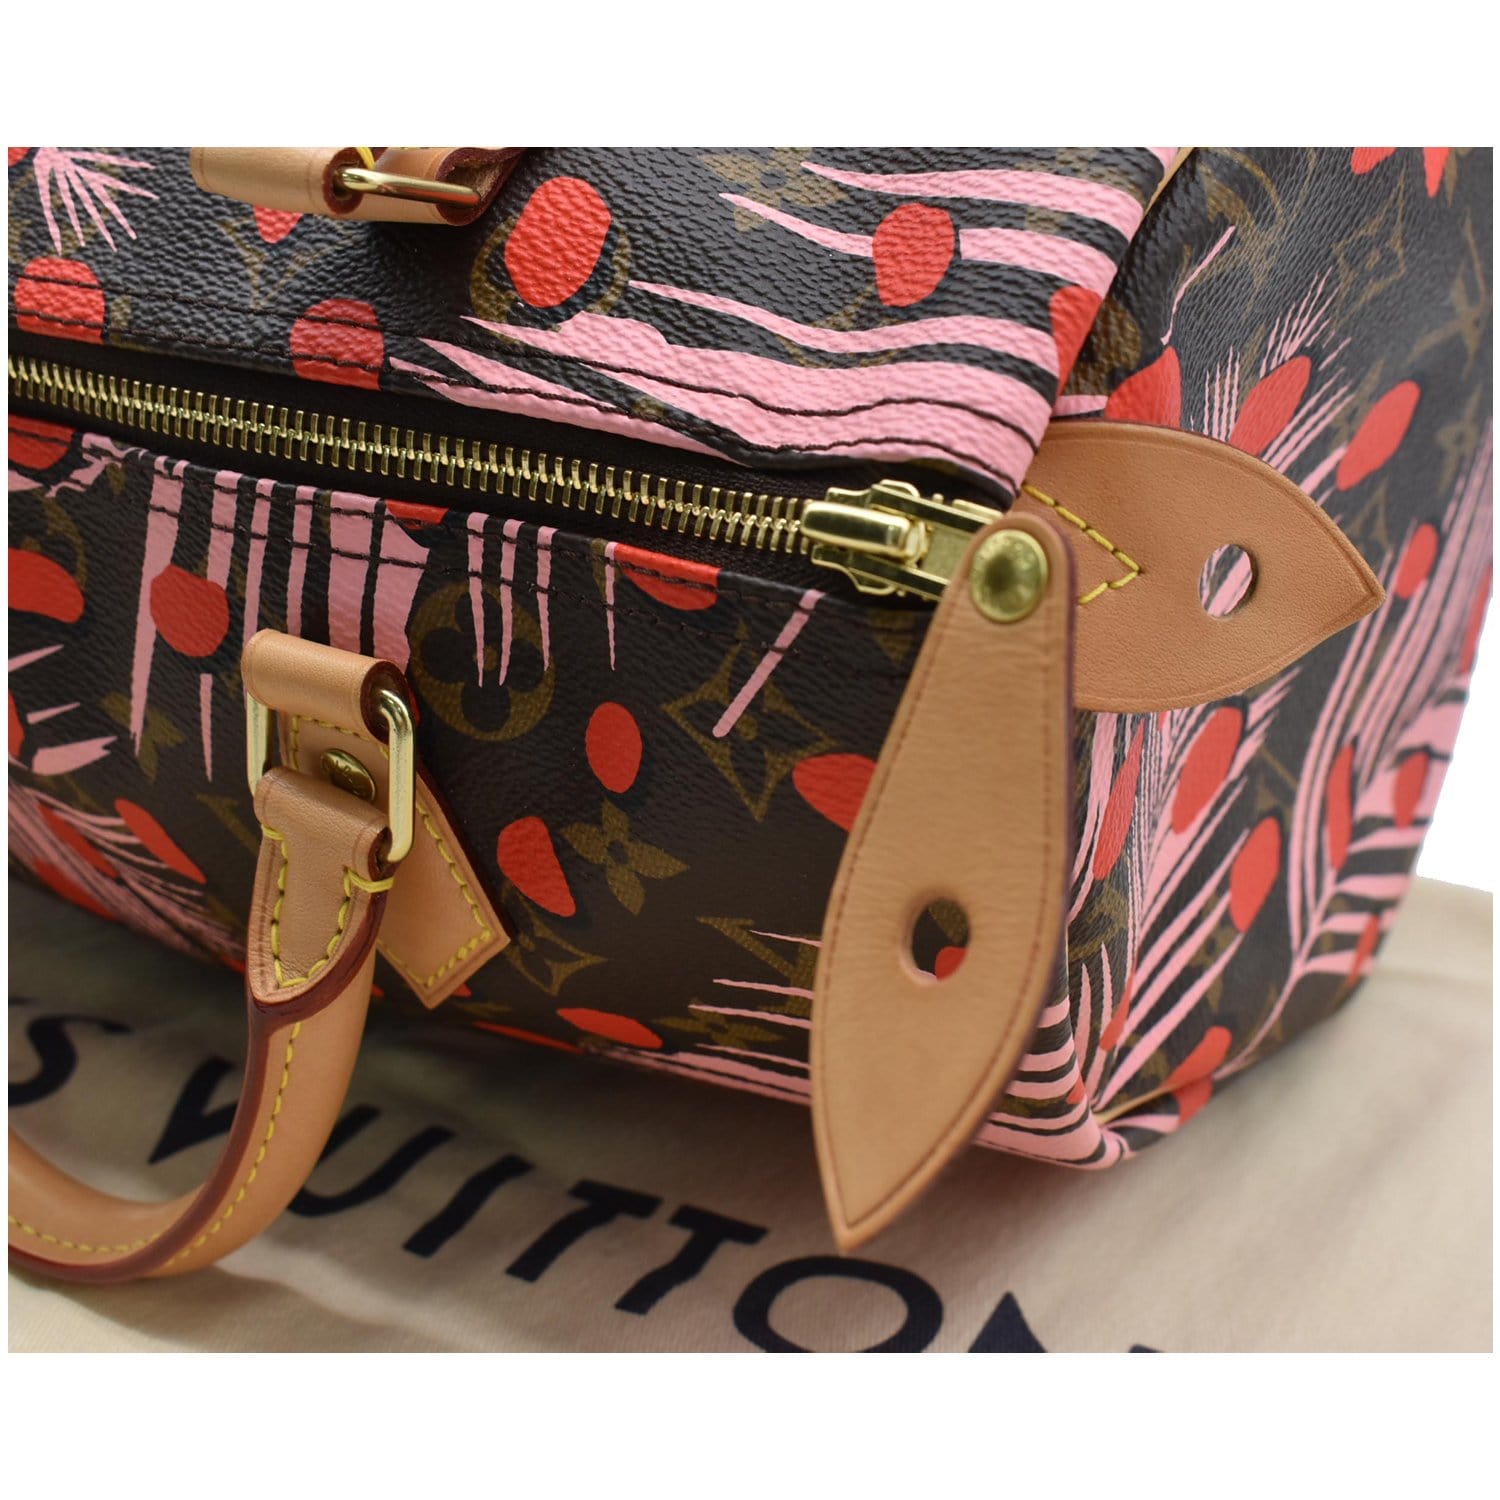 Speedy 30 Jungle Dots – Keeks Designer Handbags